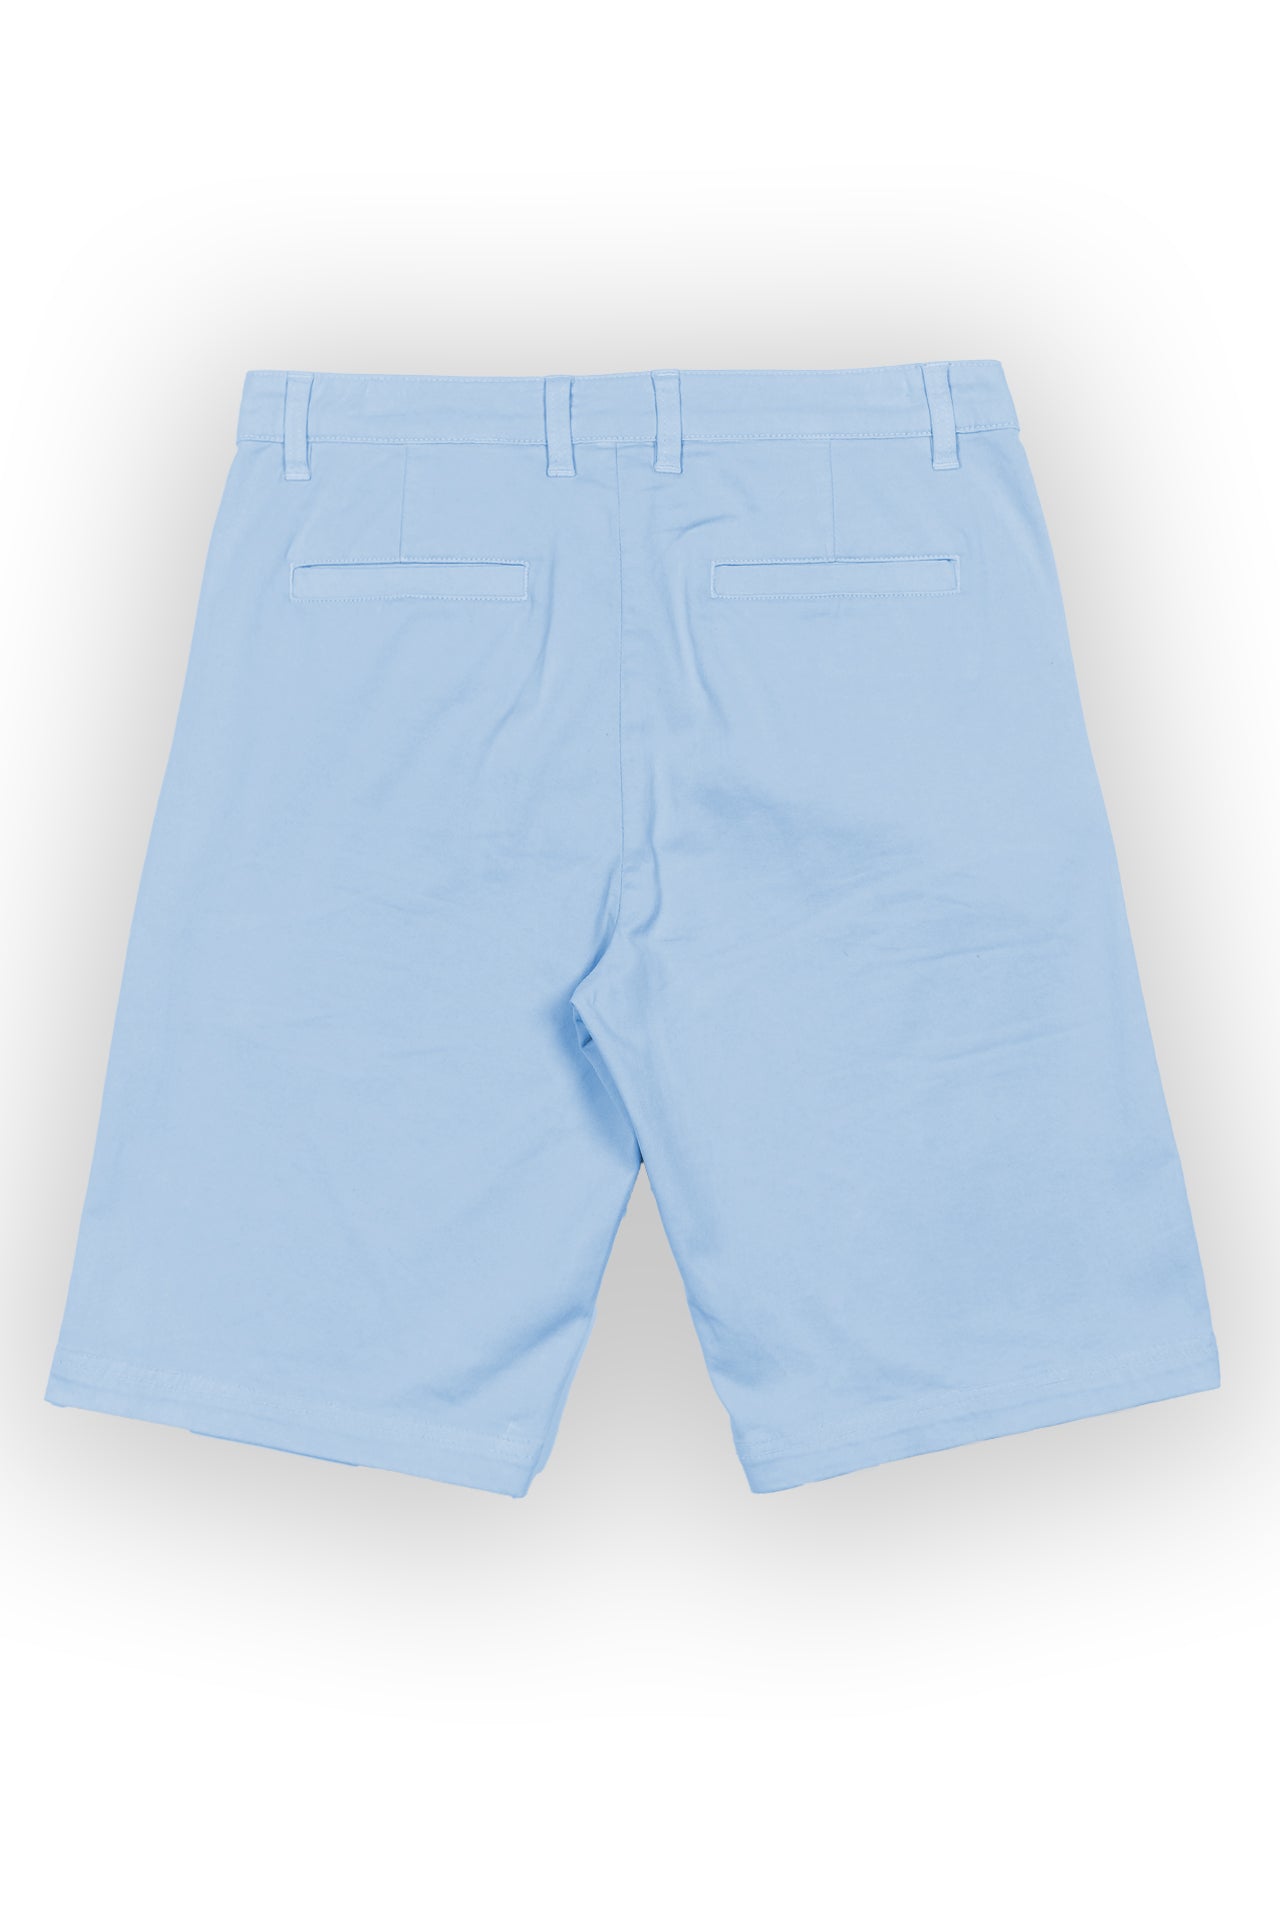 Spencer Blue Chino Shorts - Rupert and Buckley - Shorts